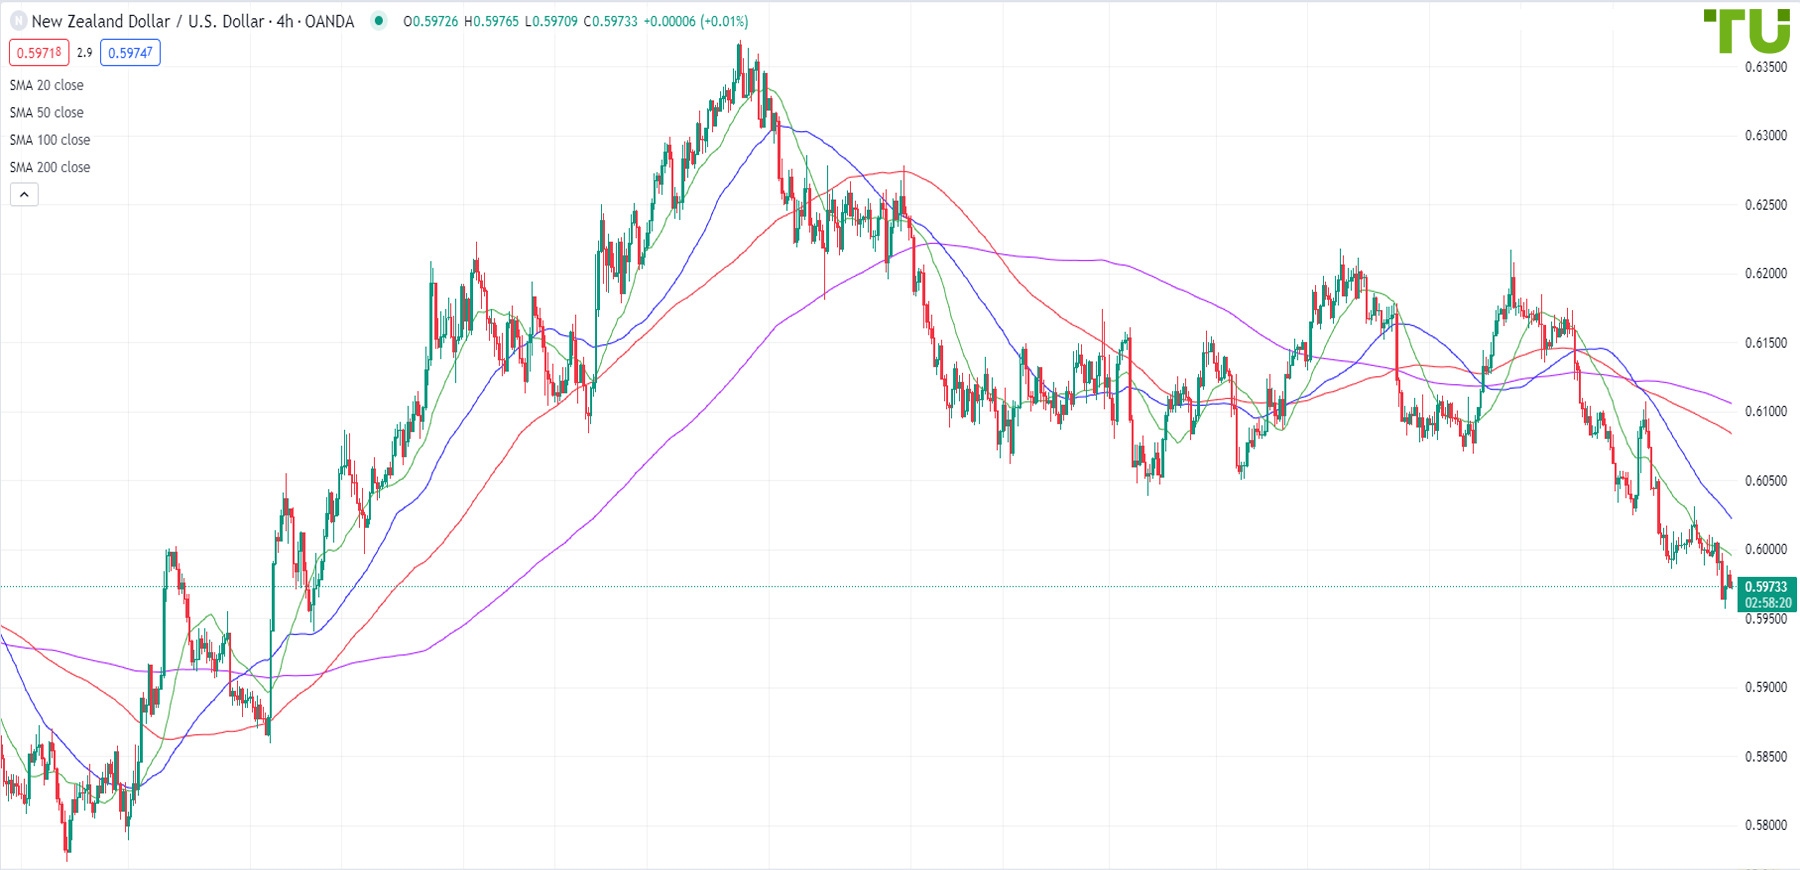 Kiwi/dollar moves lower